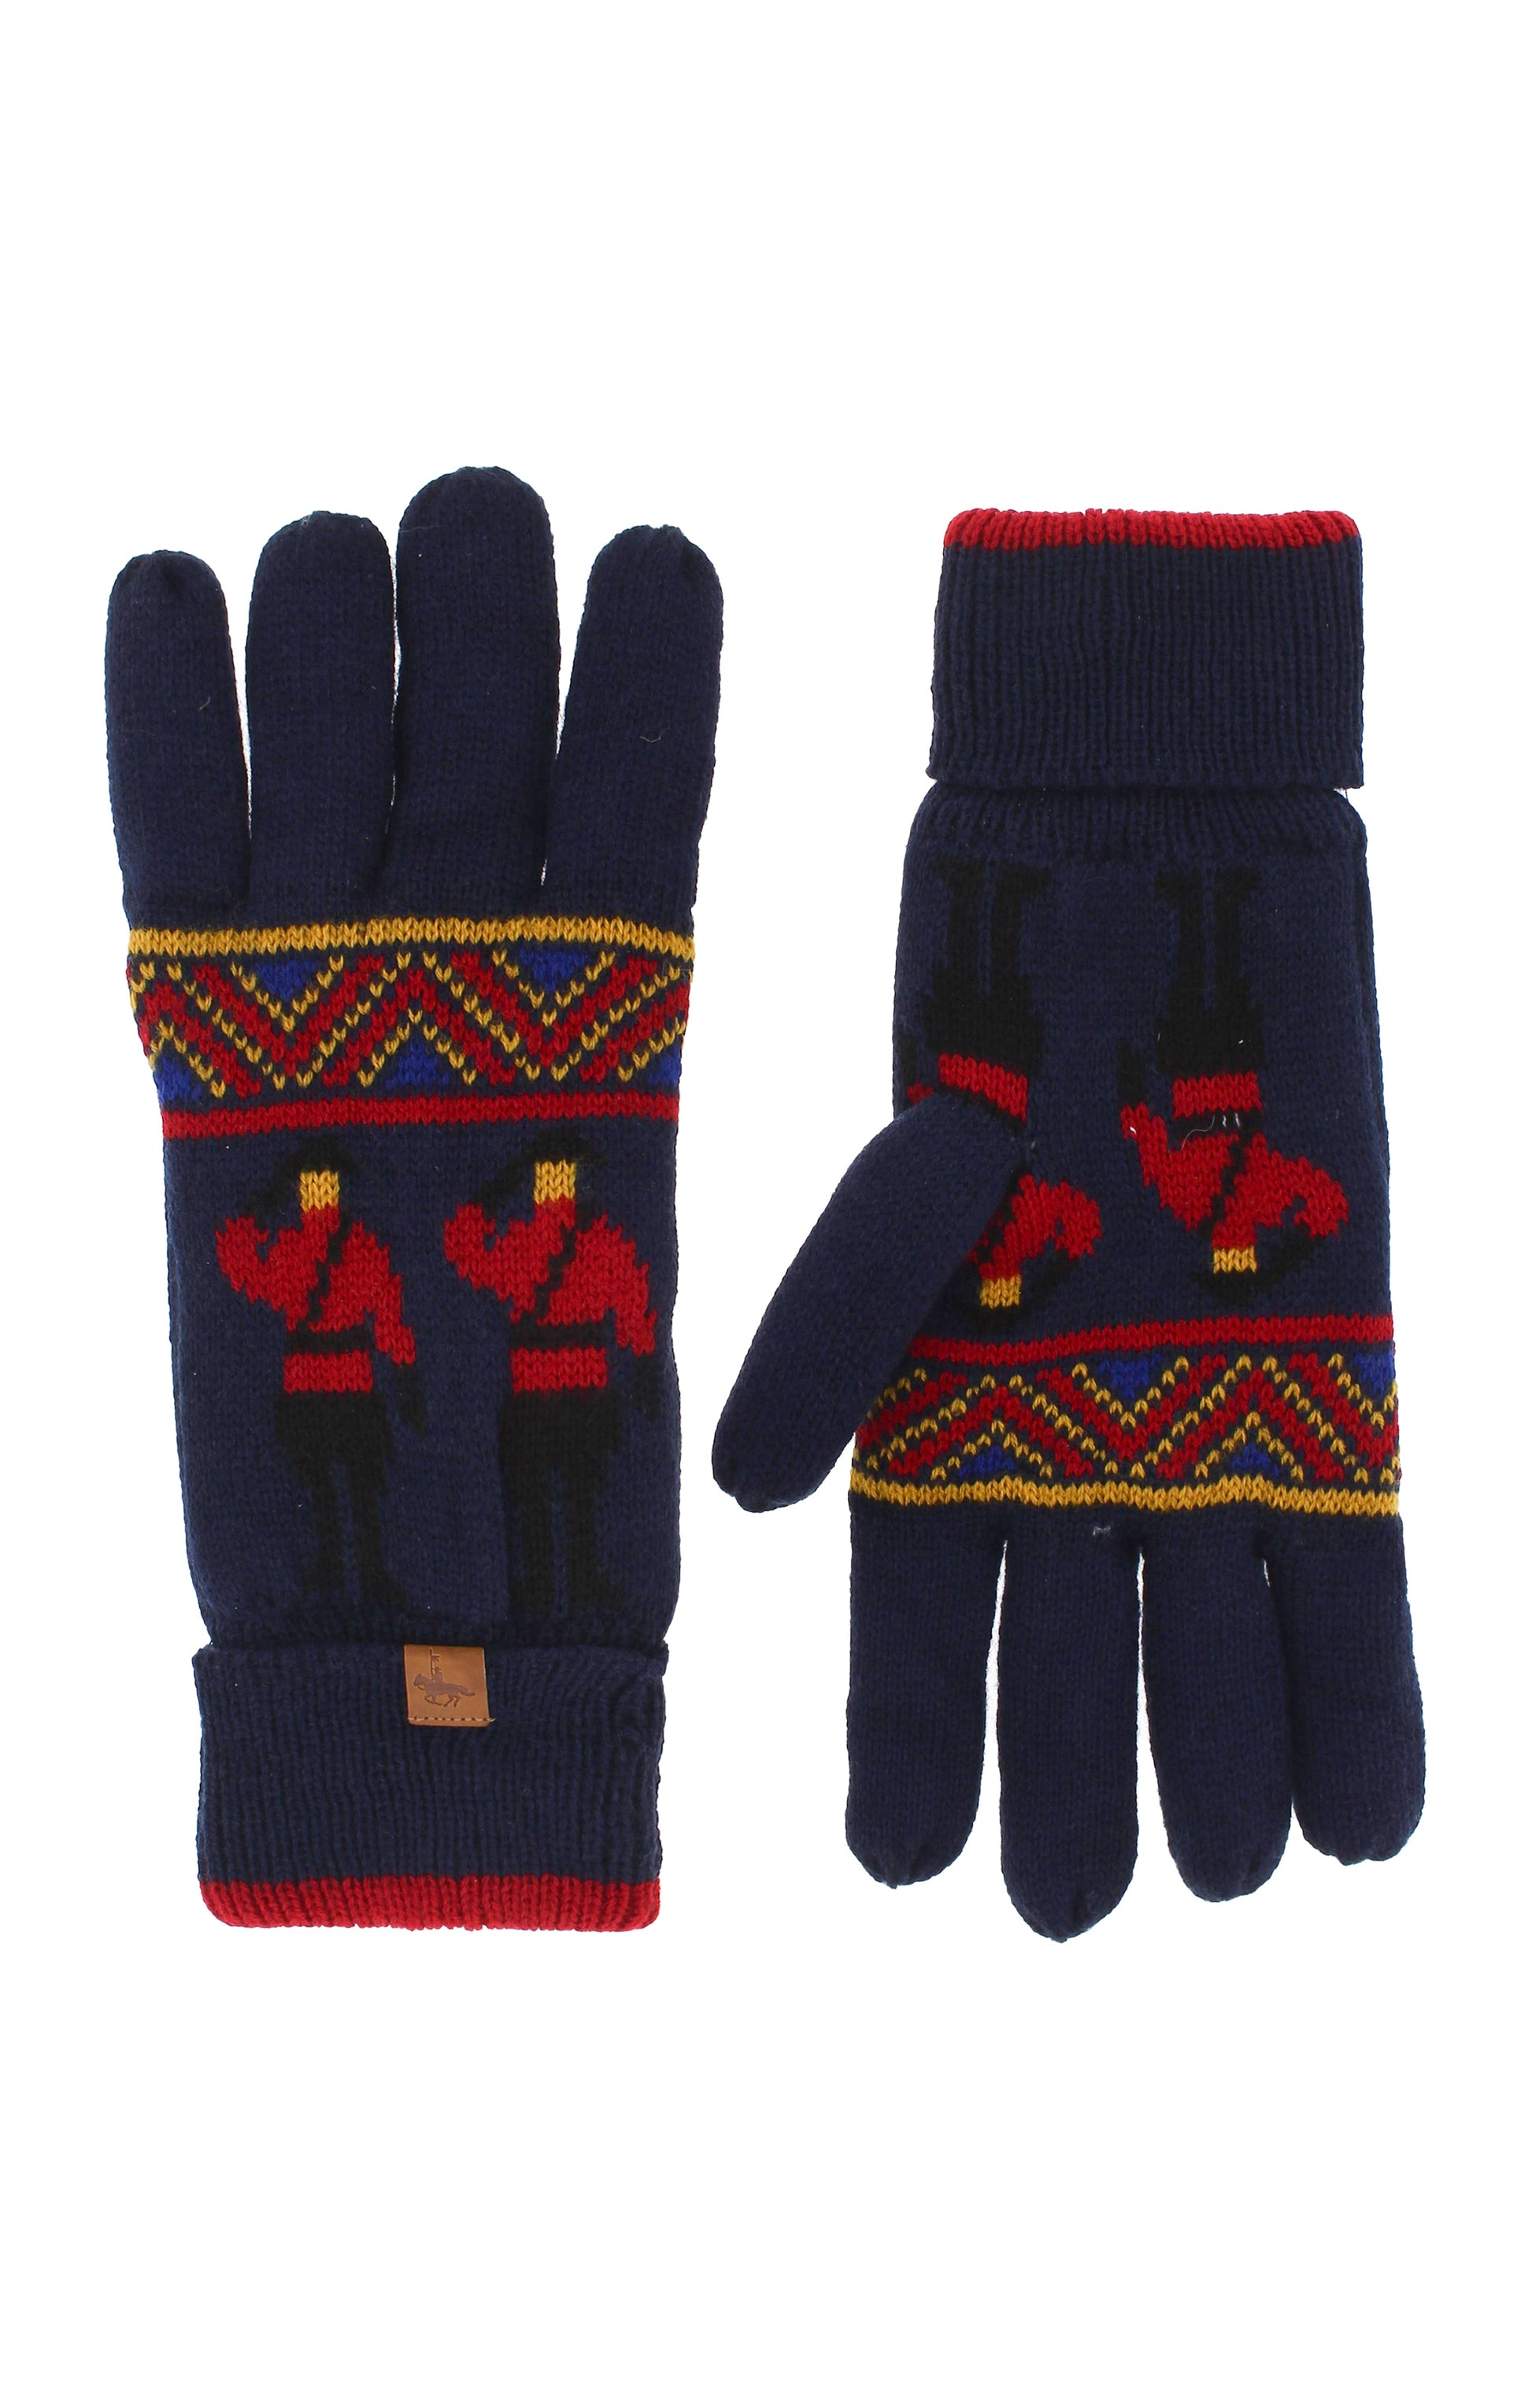 Gertex RCMP Men's Thermal Winter Gloves